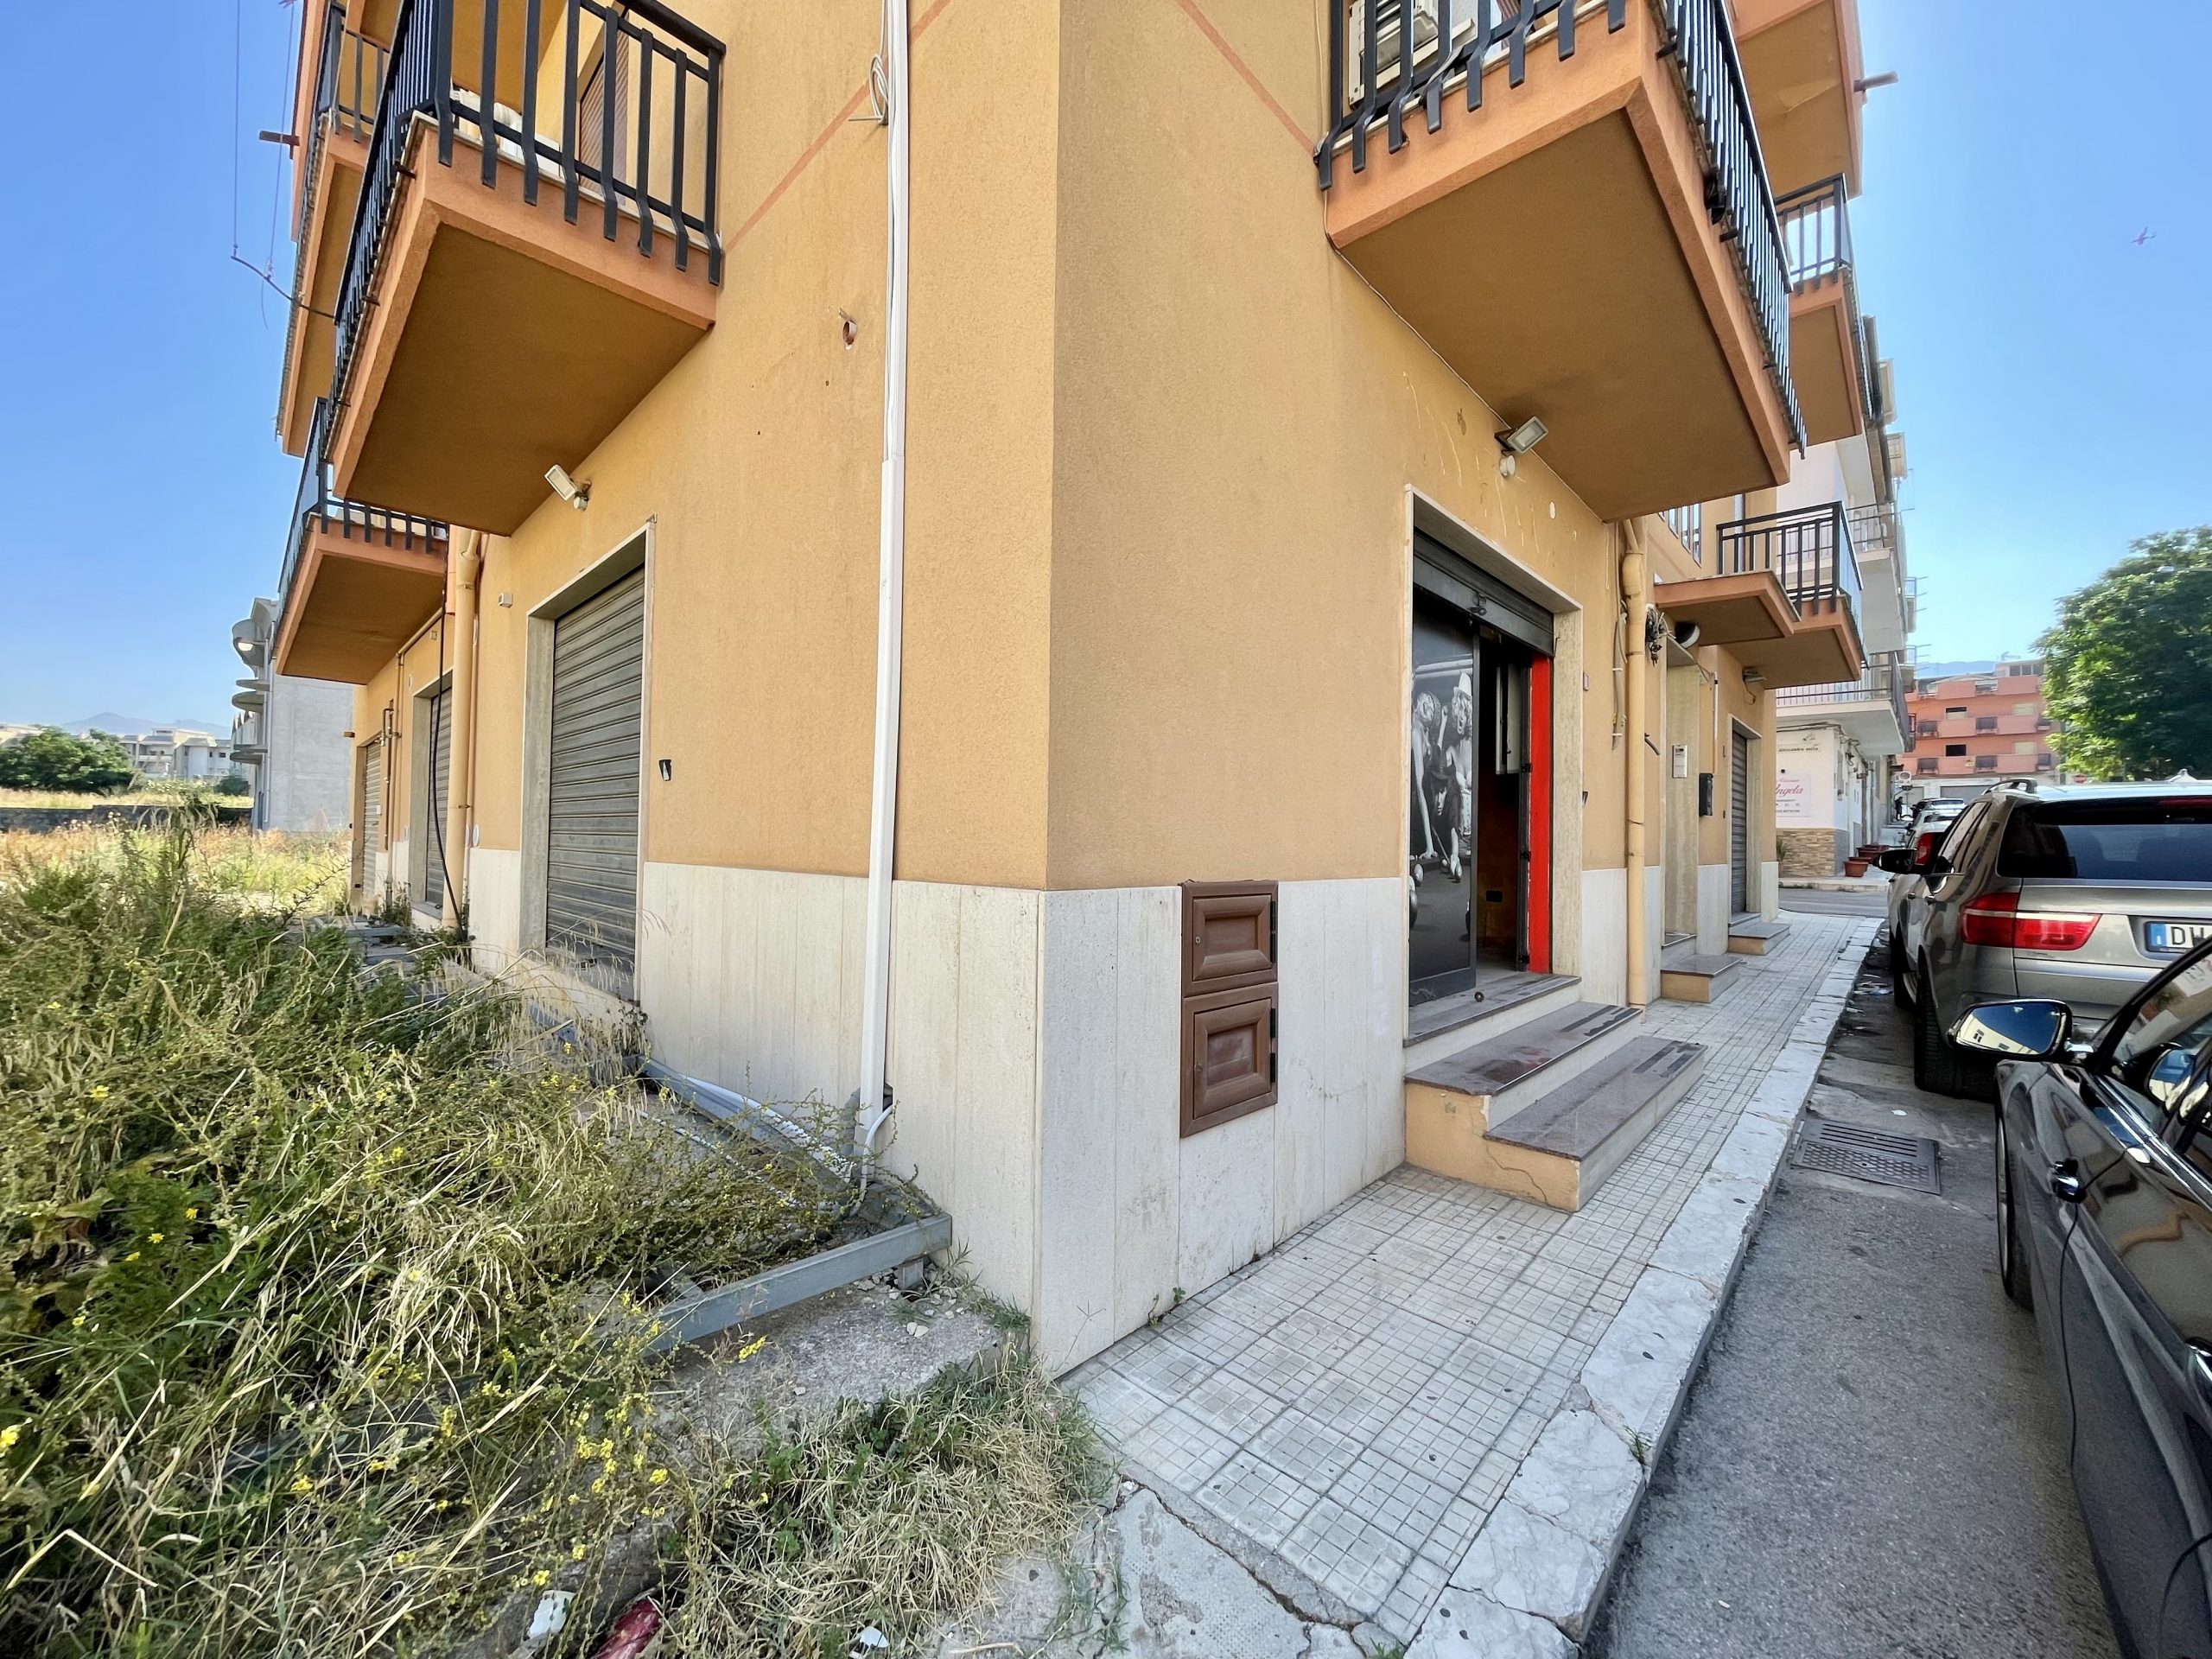 Locale commerciale in affitto a Partinico, Via Torricelli